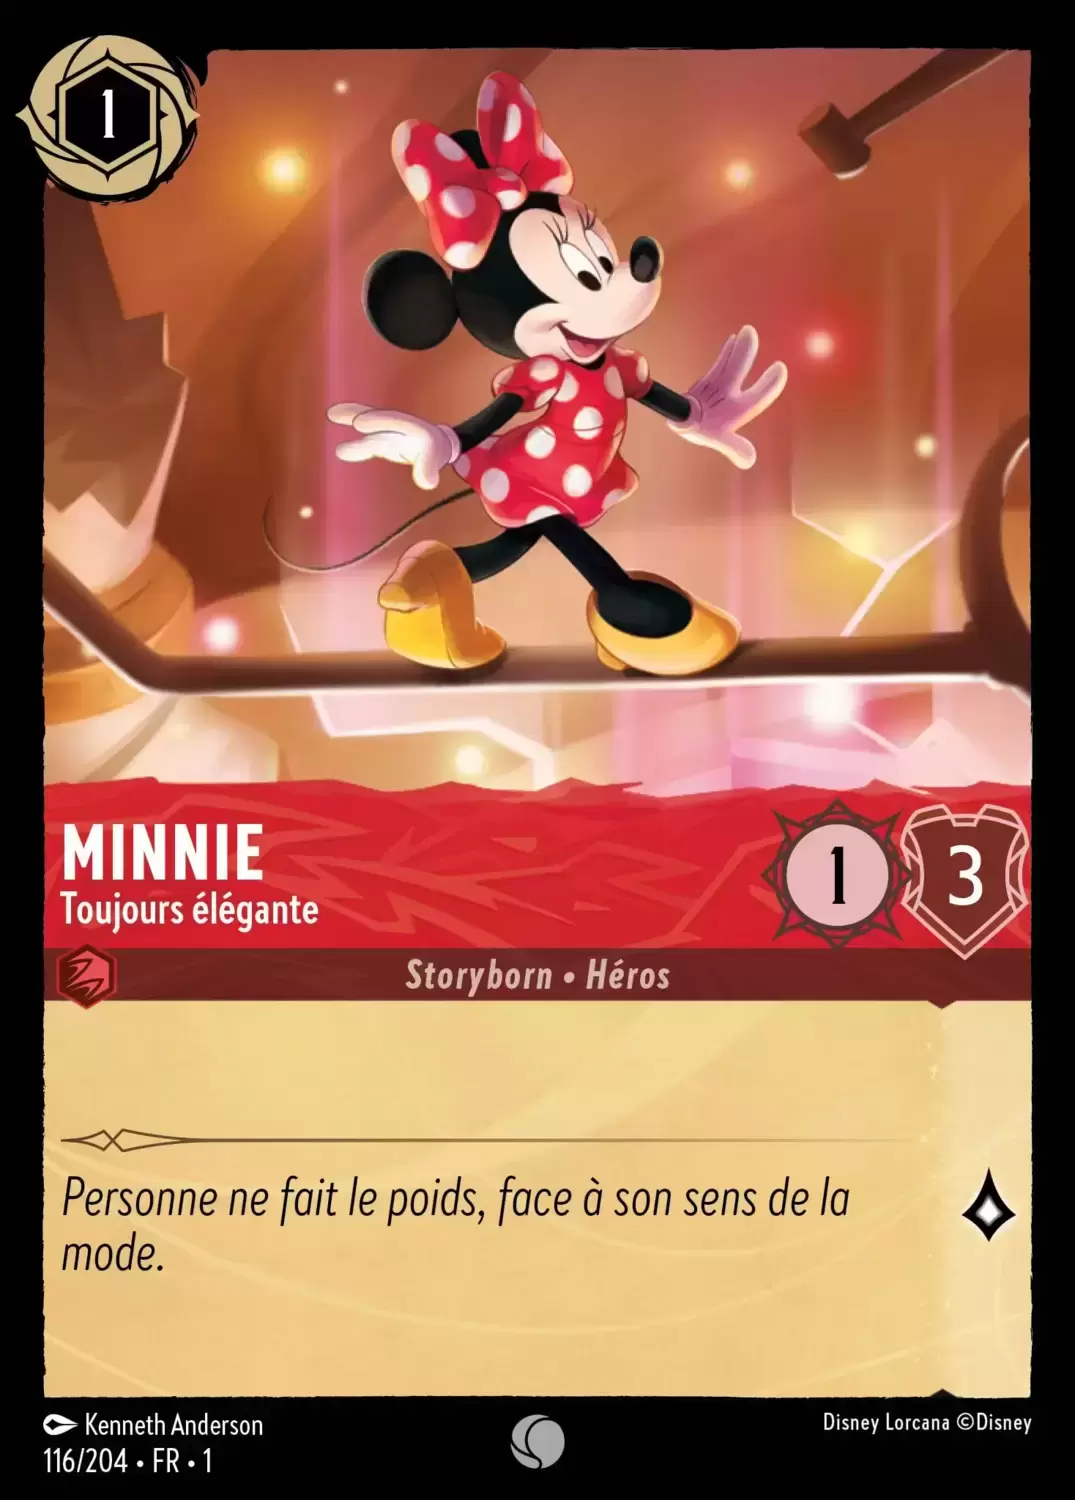 Mickey Mouse, Brave petit tailleur - Lorcana TCG